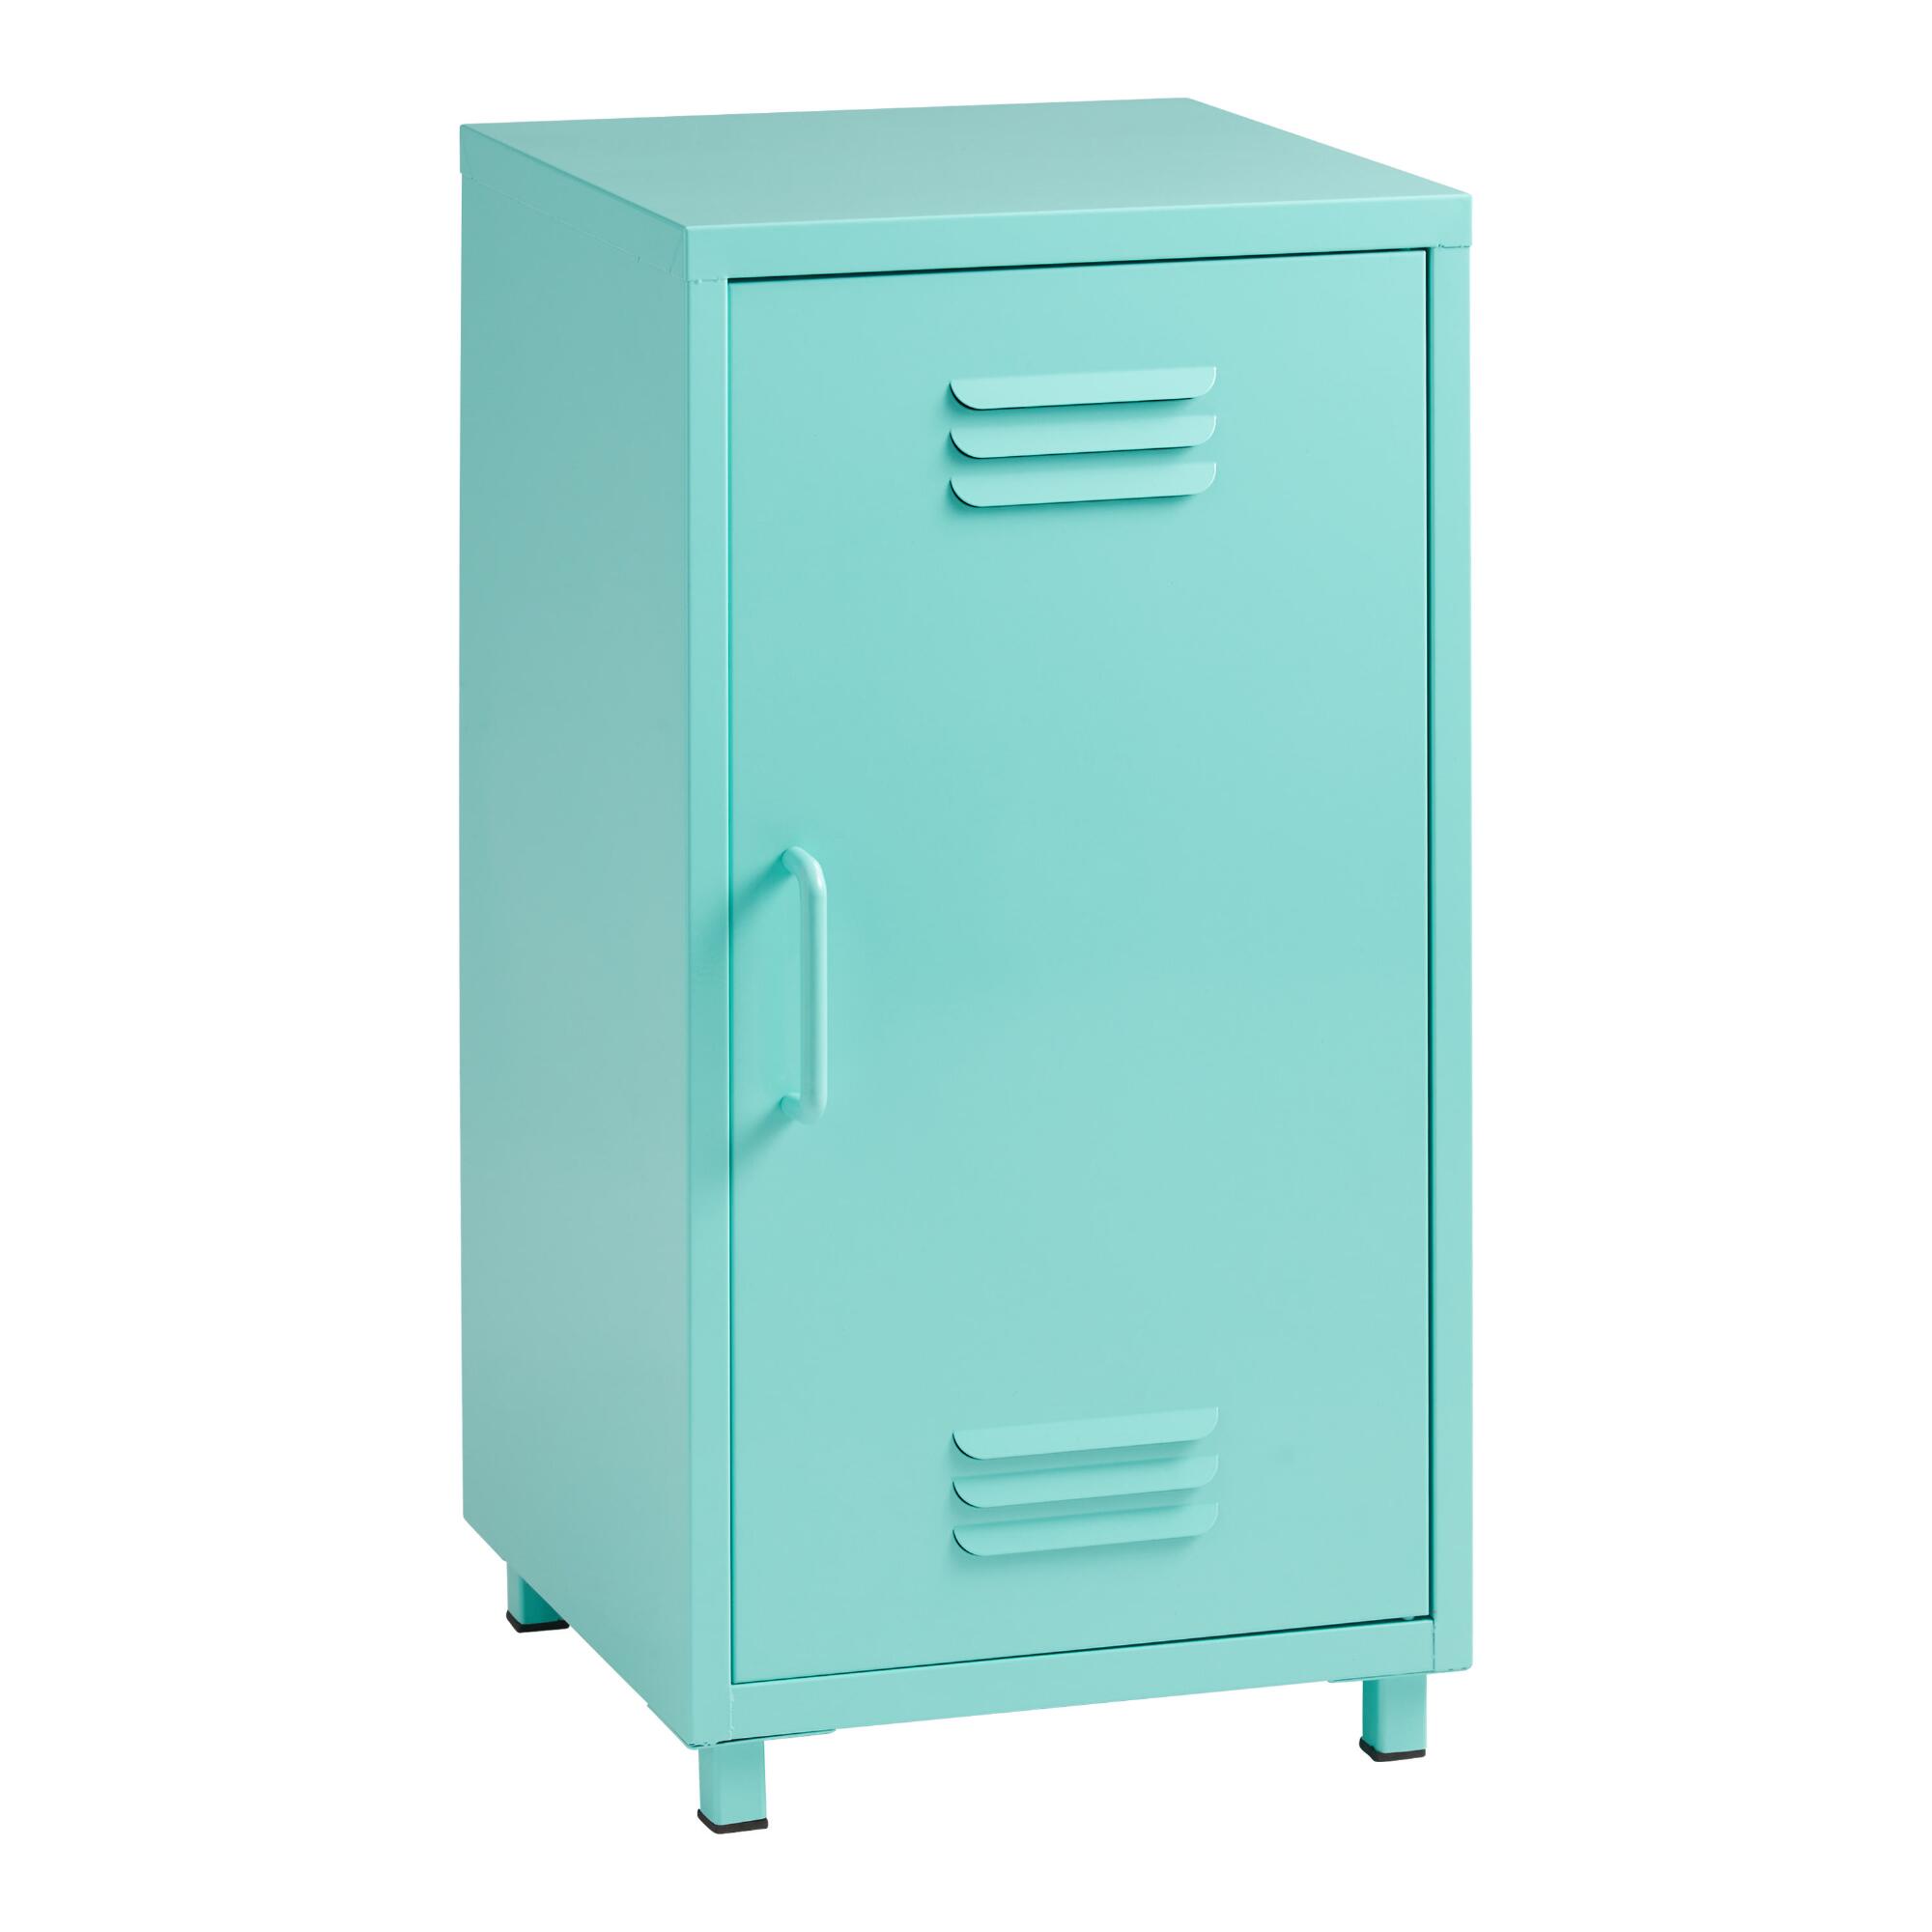 Aqua Metal Locker Wilson Storage Cabinet - Iron by World Market